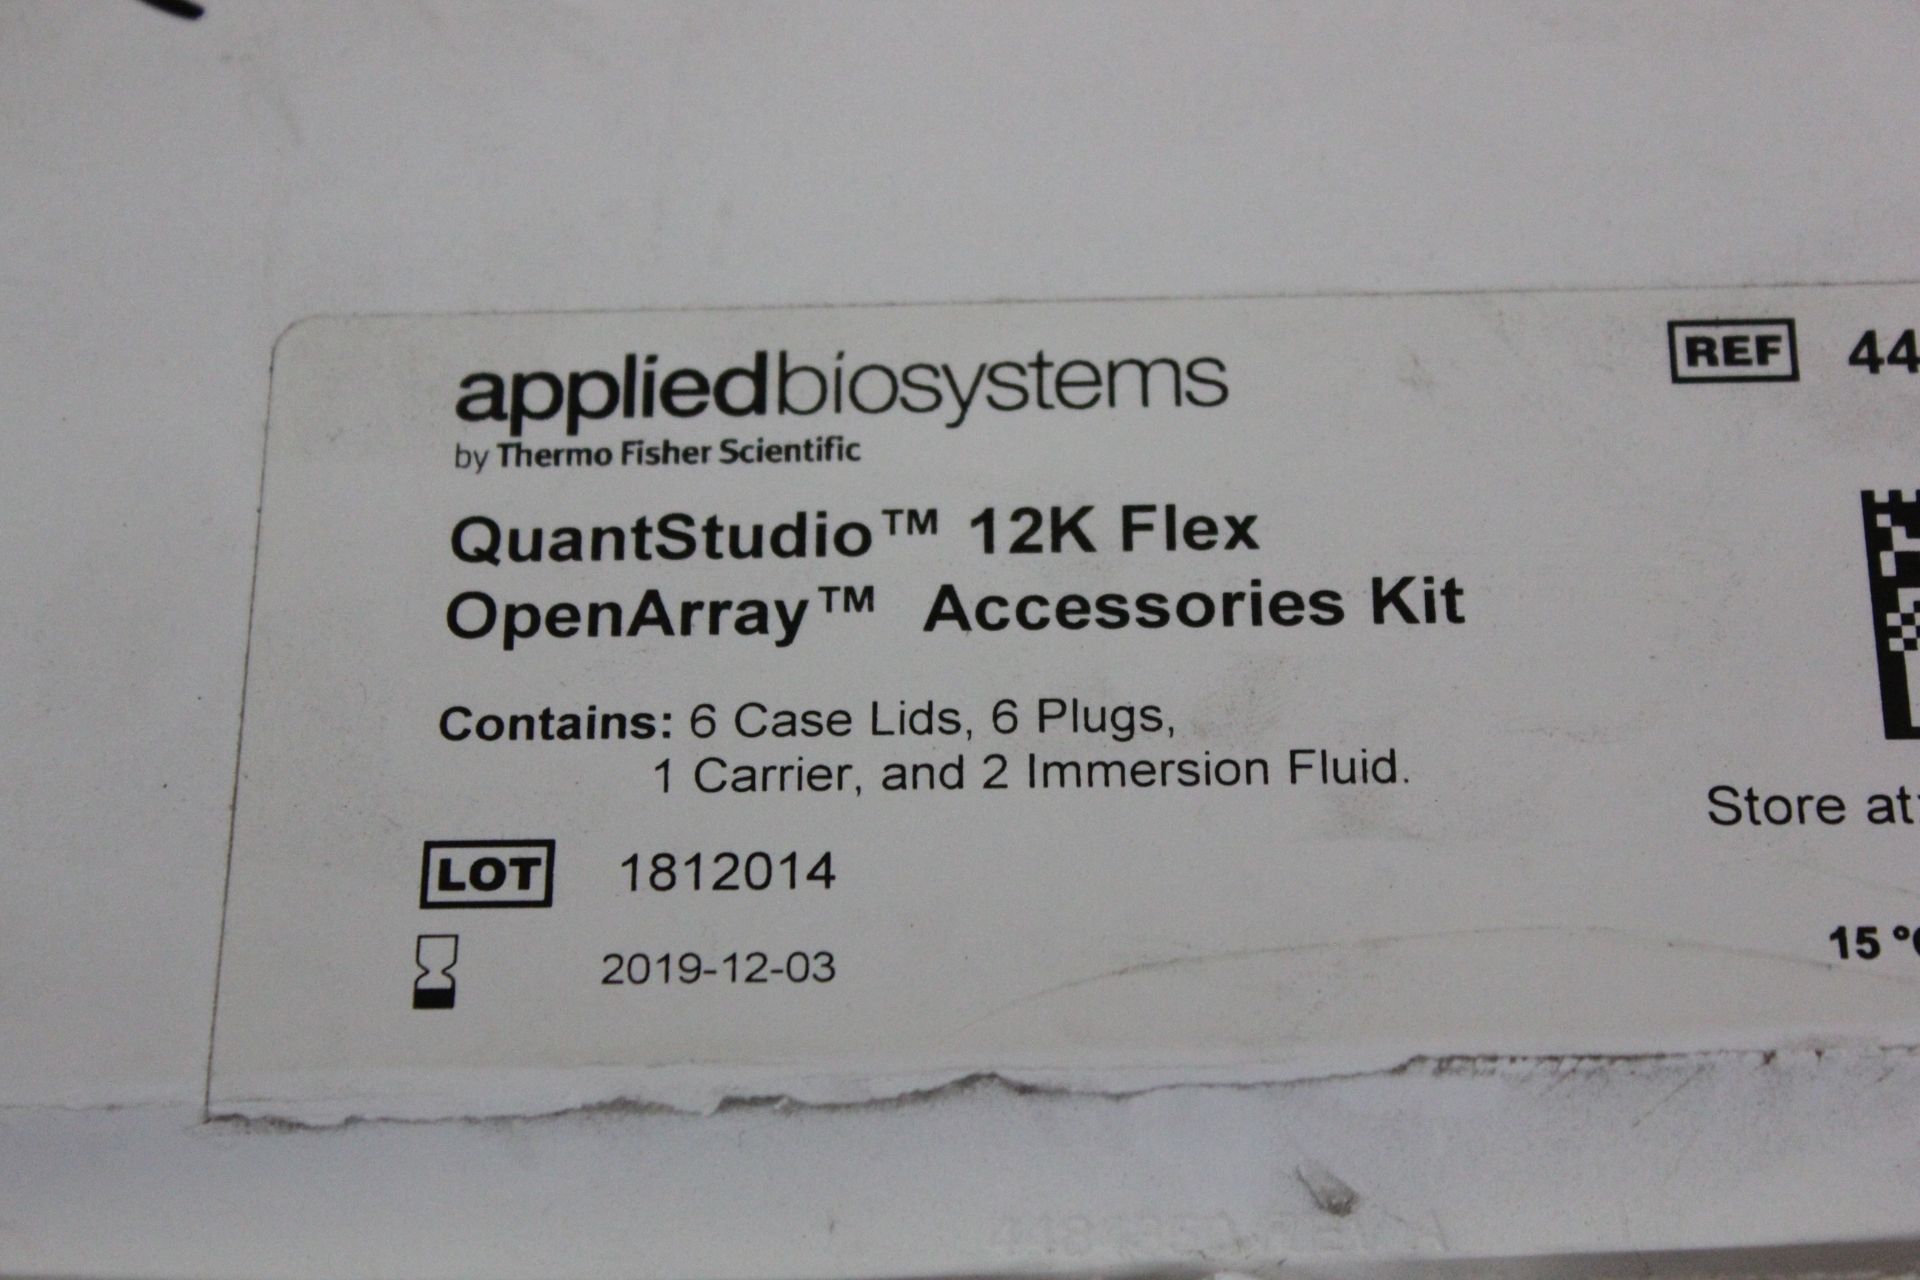 APPLIED BIOSYSTEMS QUANTSTUDIO 12K FLEX OPENARRAY ACCESSORIES KIT - Image 2 of 6